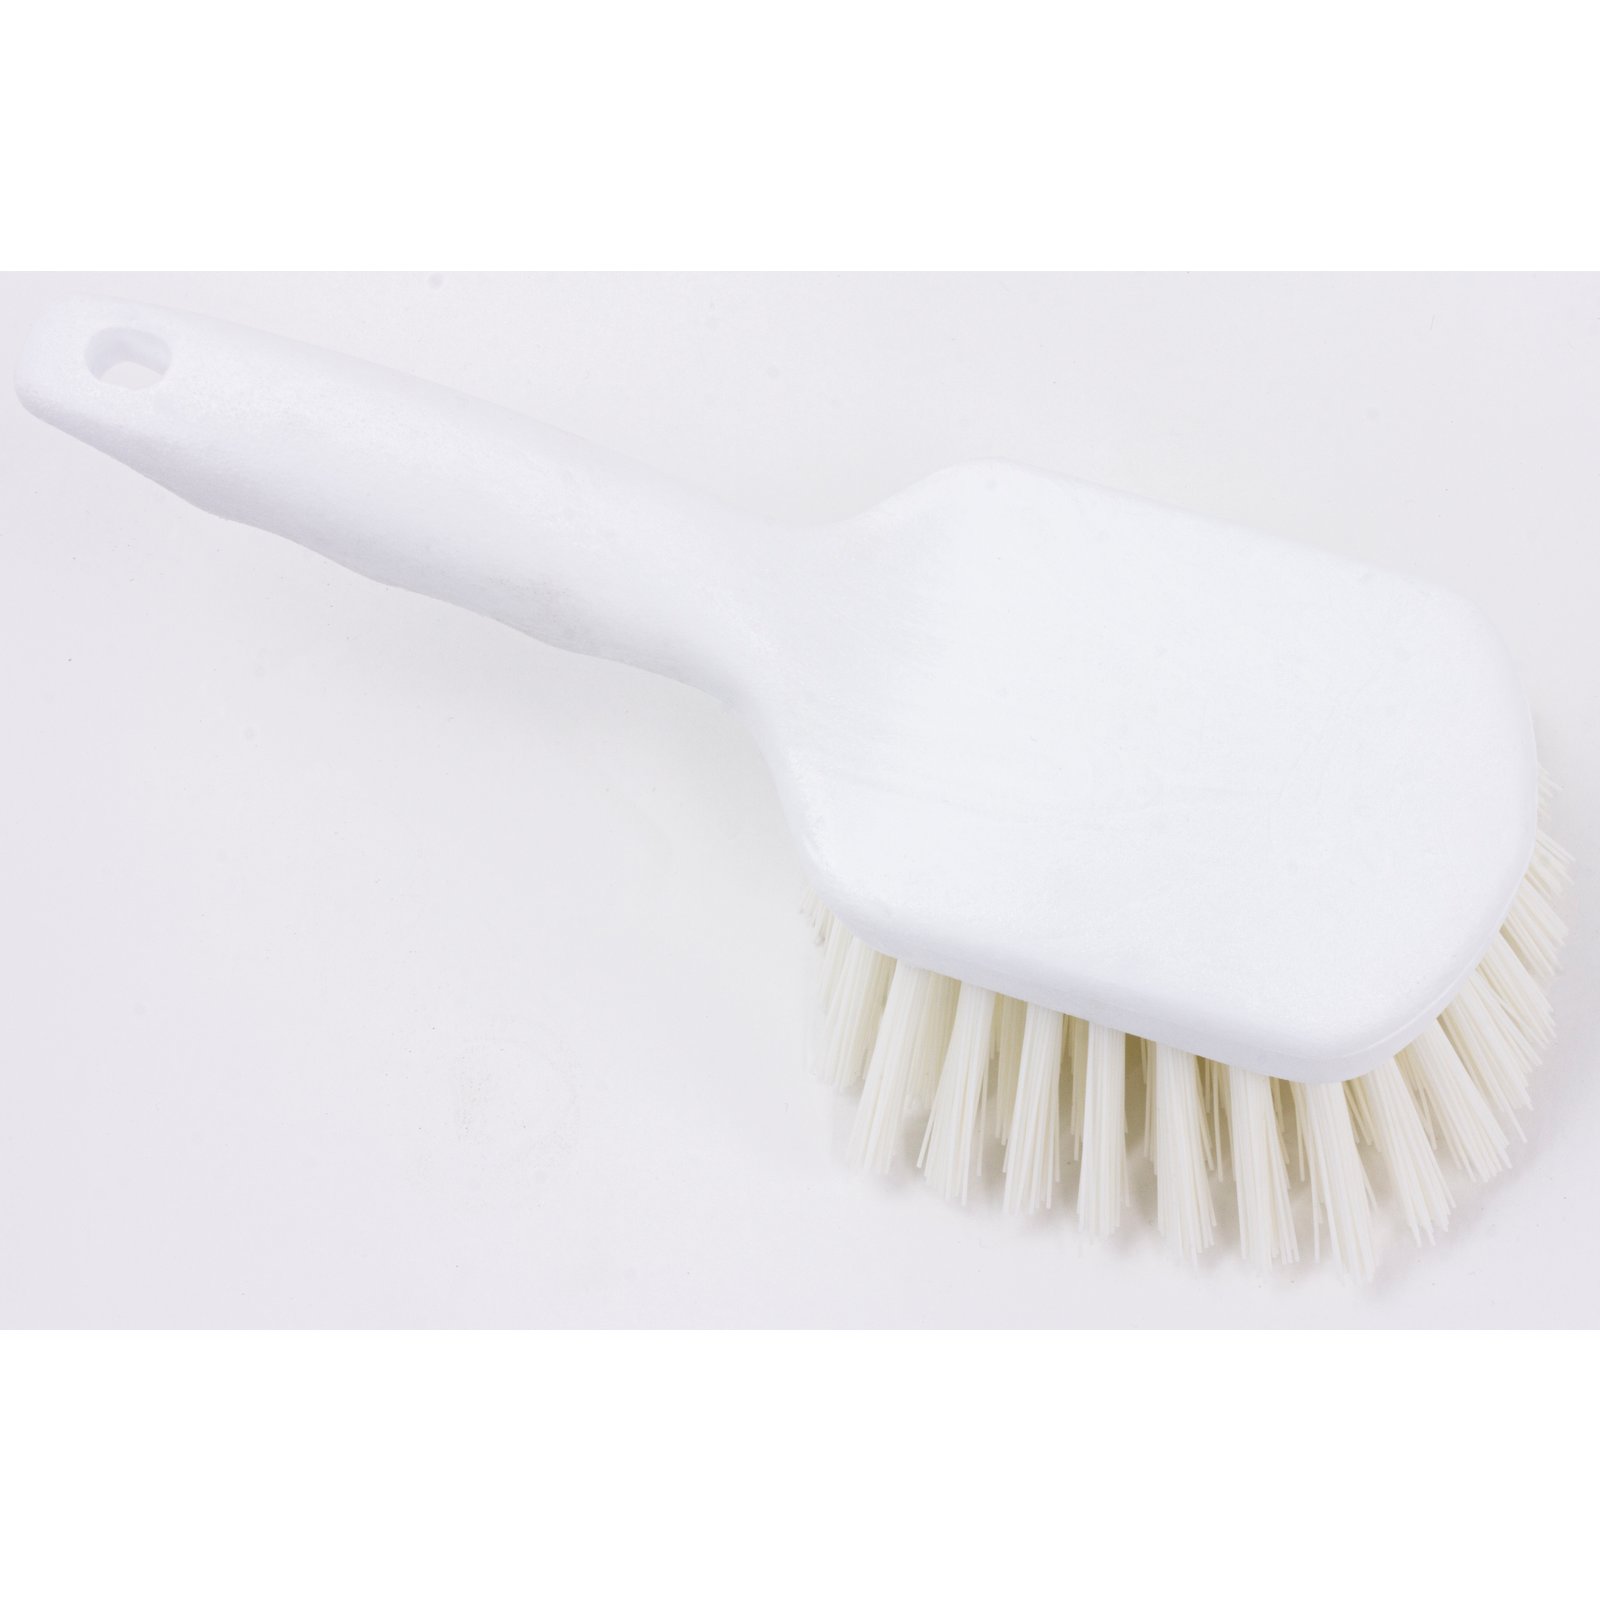 4054500 - Sparta® Bent Handle Utility Scrub Brush With Stiff Polyester  Bristles 8 x 3 - White